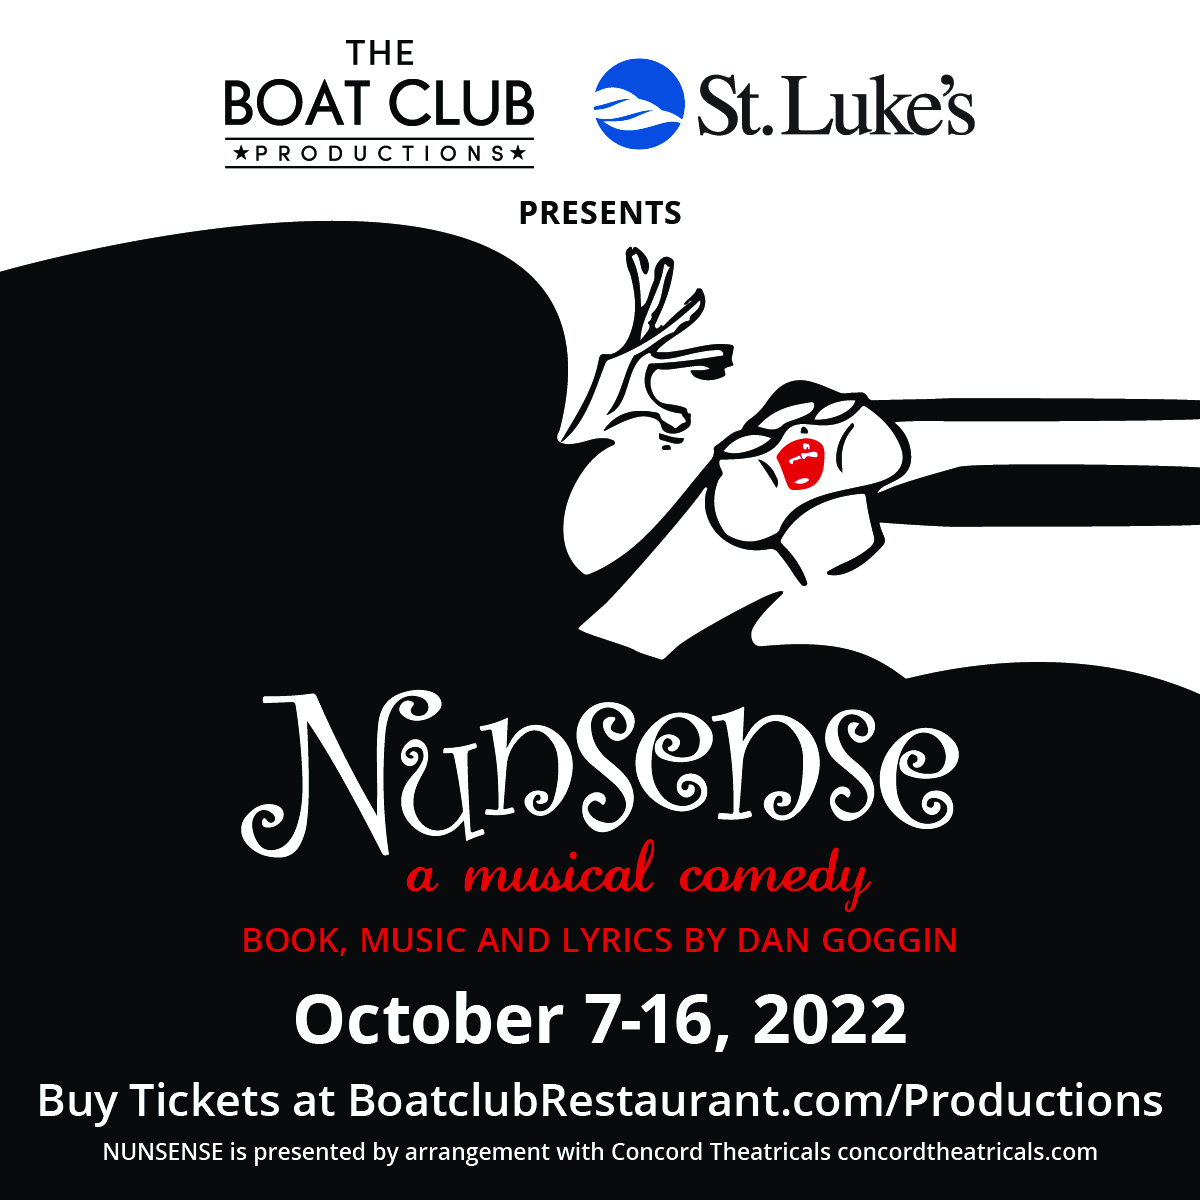 The Boat Club presents: Nunsense